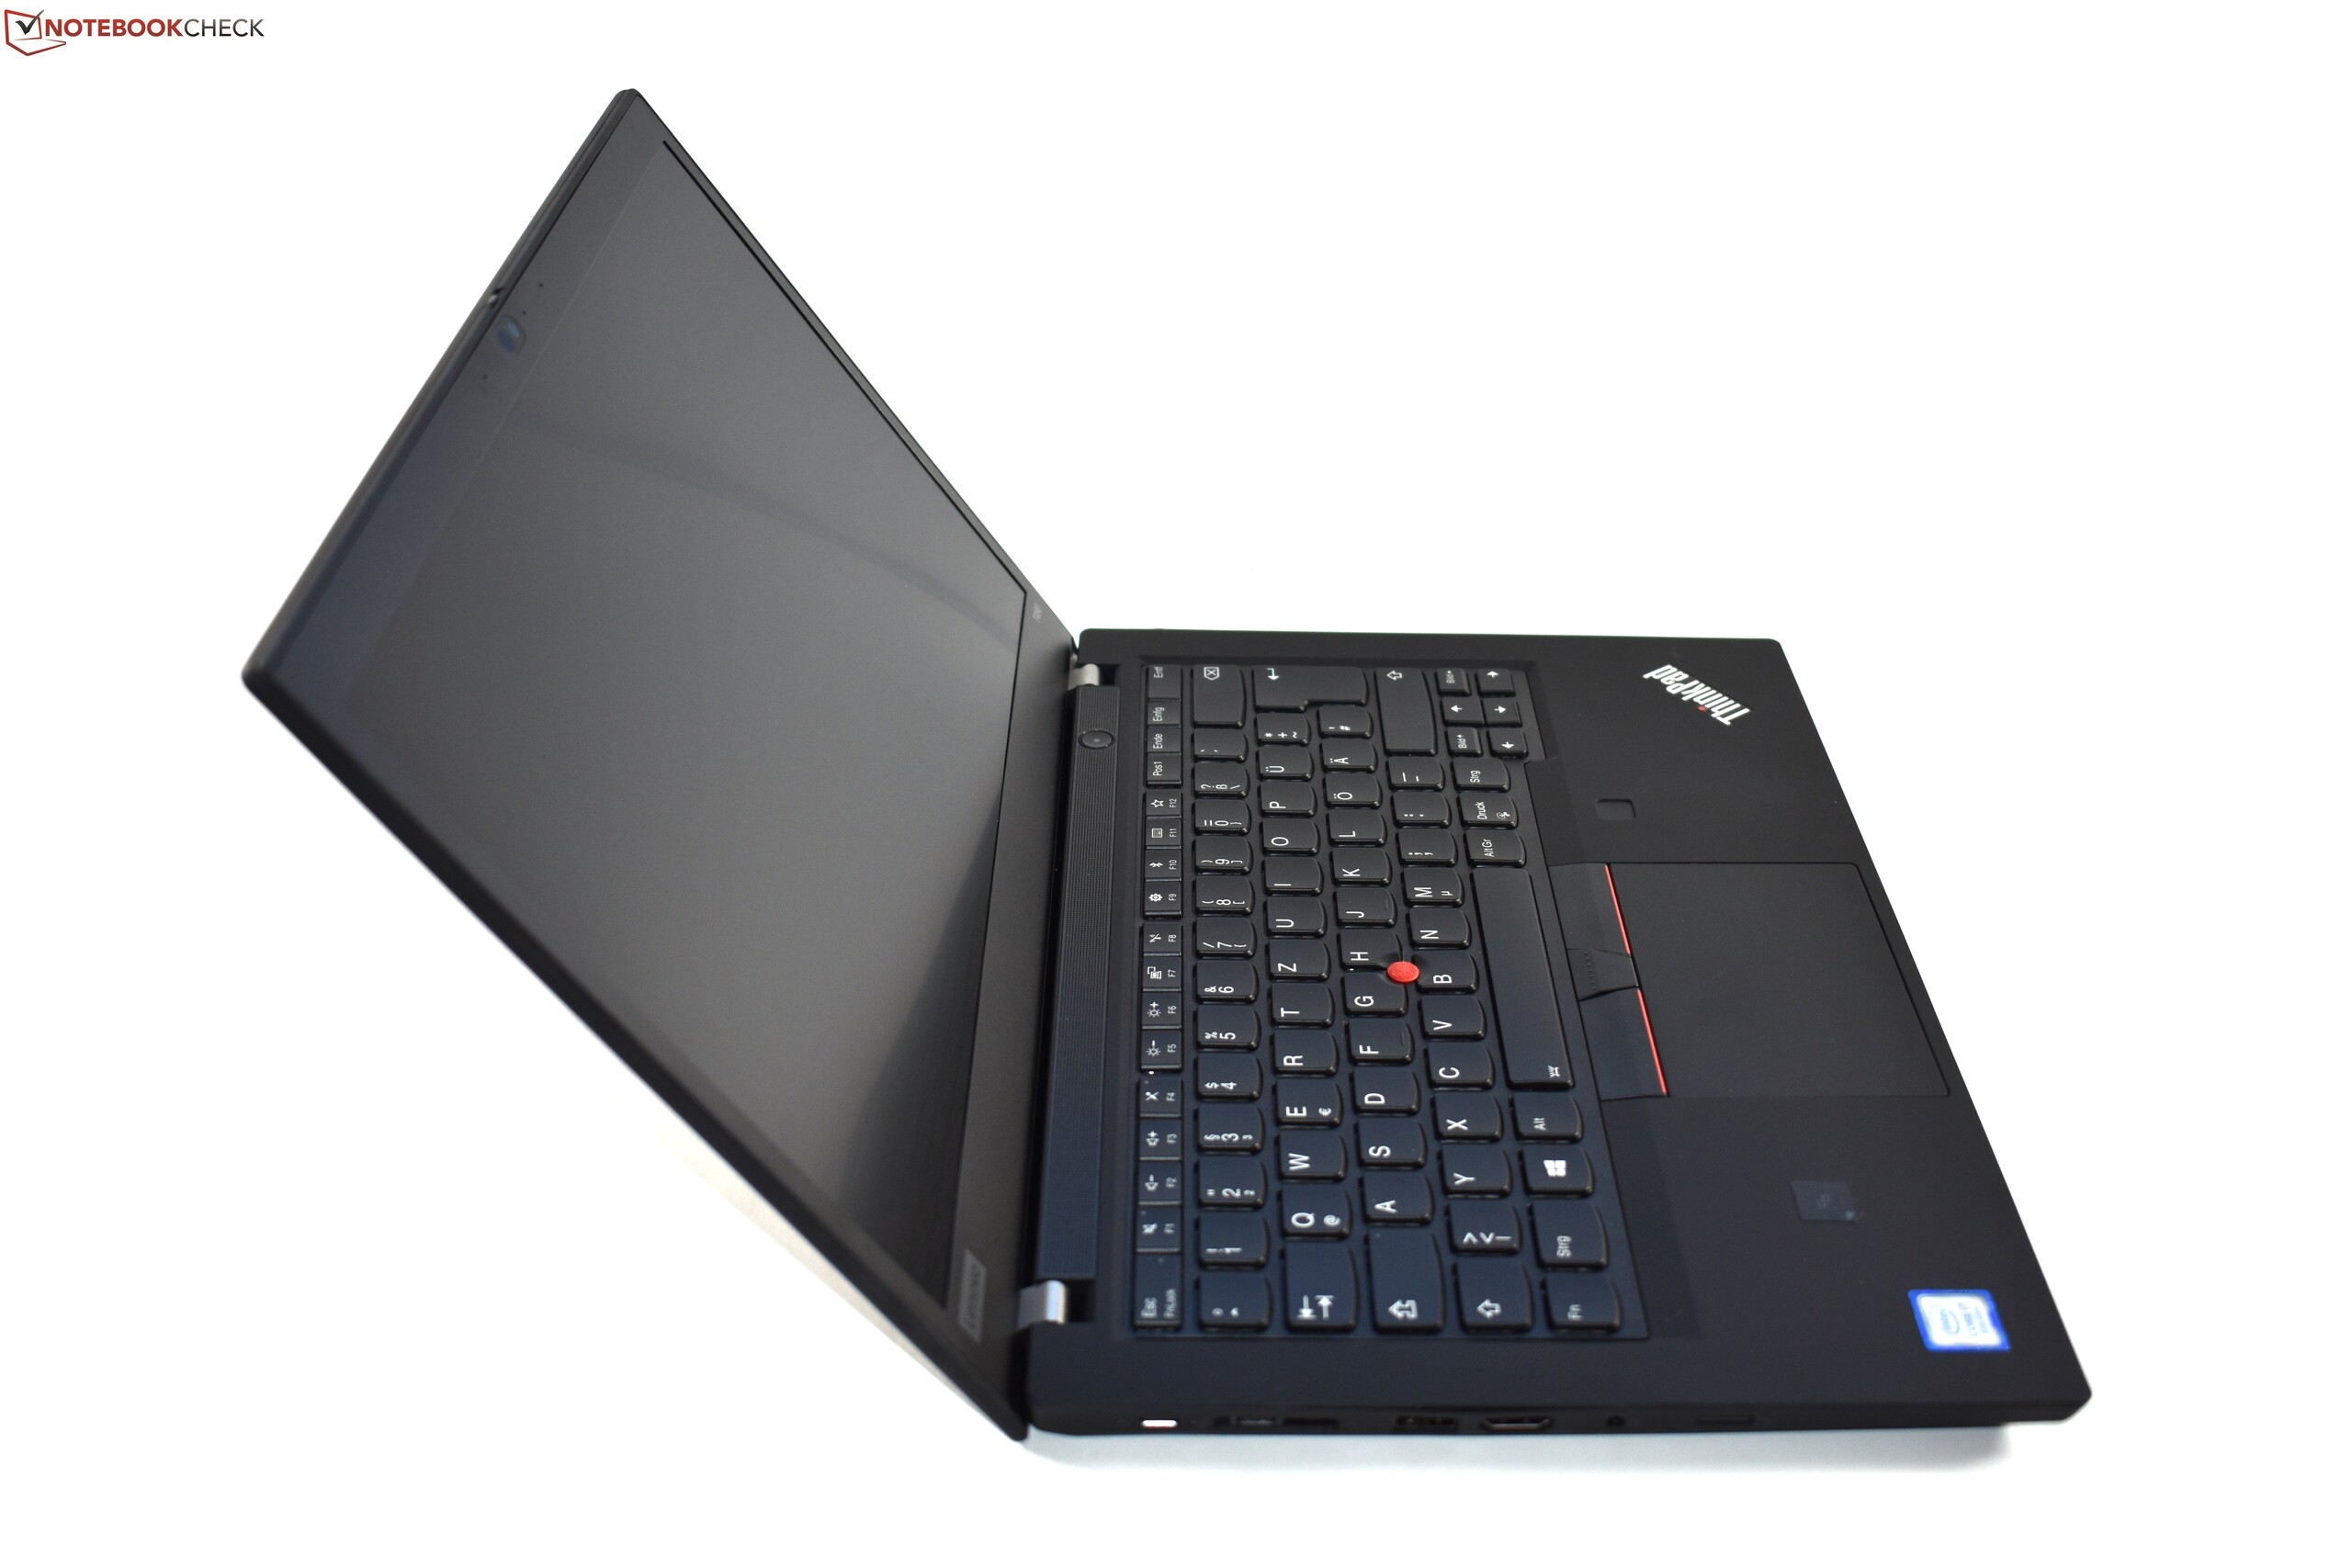 Lenovo ThinkPad T490 14.0 FHD (1920x1080) 250 nits IPS Anti-Glare Display  - Intel Core i5-8265U Processor, 16GB RAM, 512GB PCIe-NVMe SSD, Windows 10